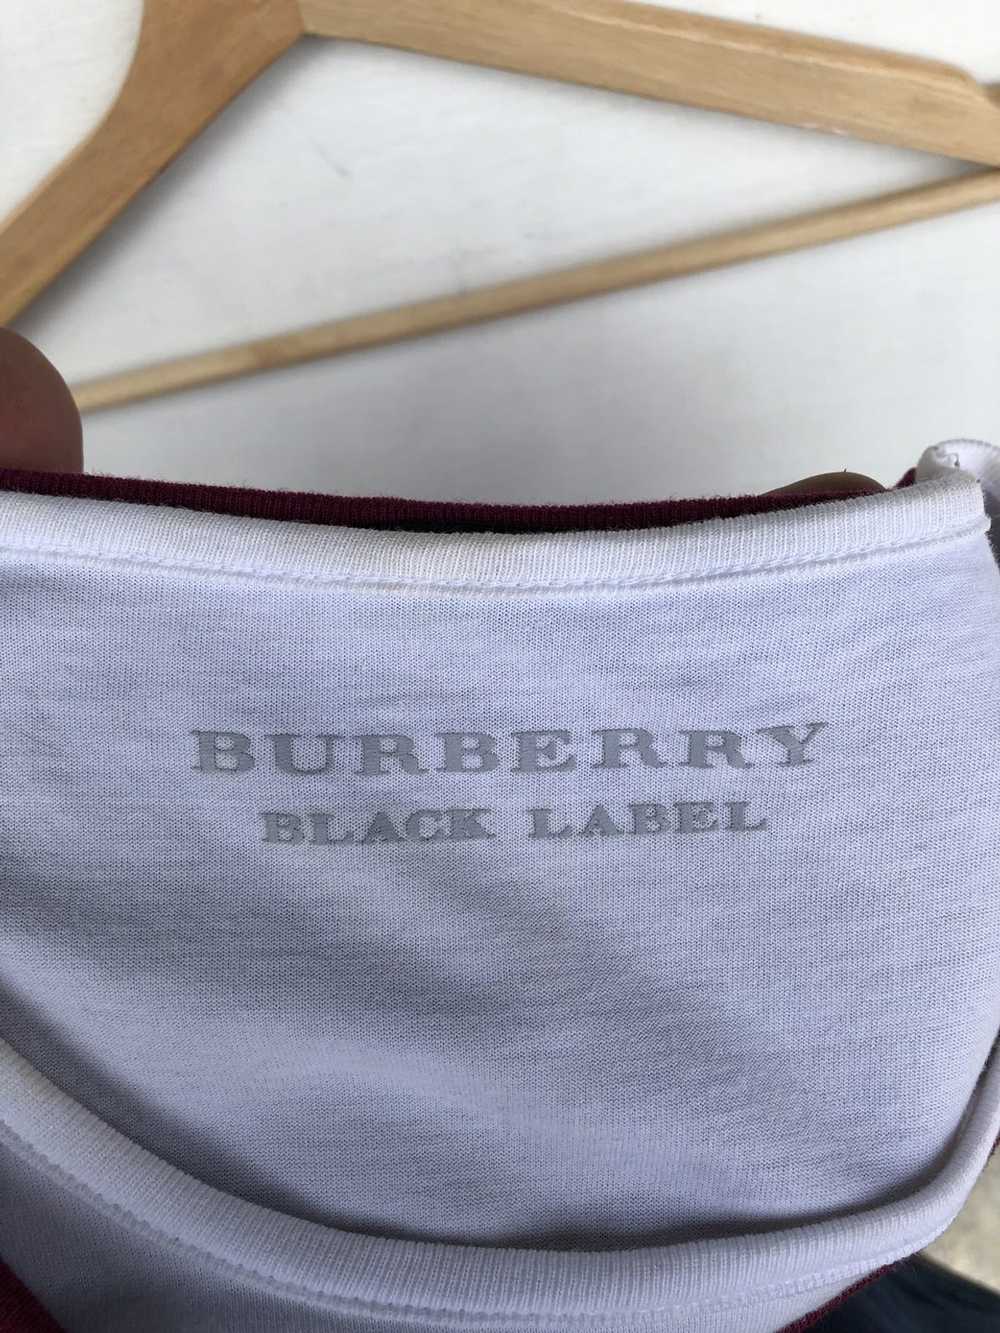 Burberry Burberry Black Label Long Sleeve T-Shirt - image 10